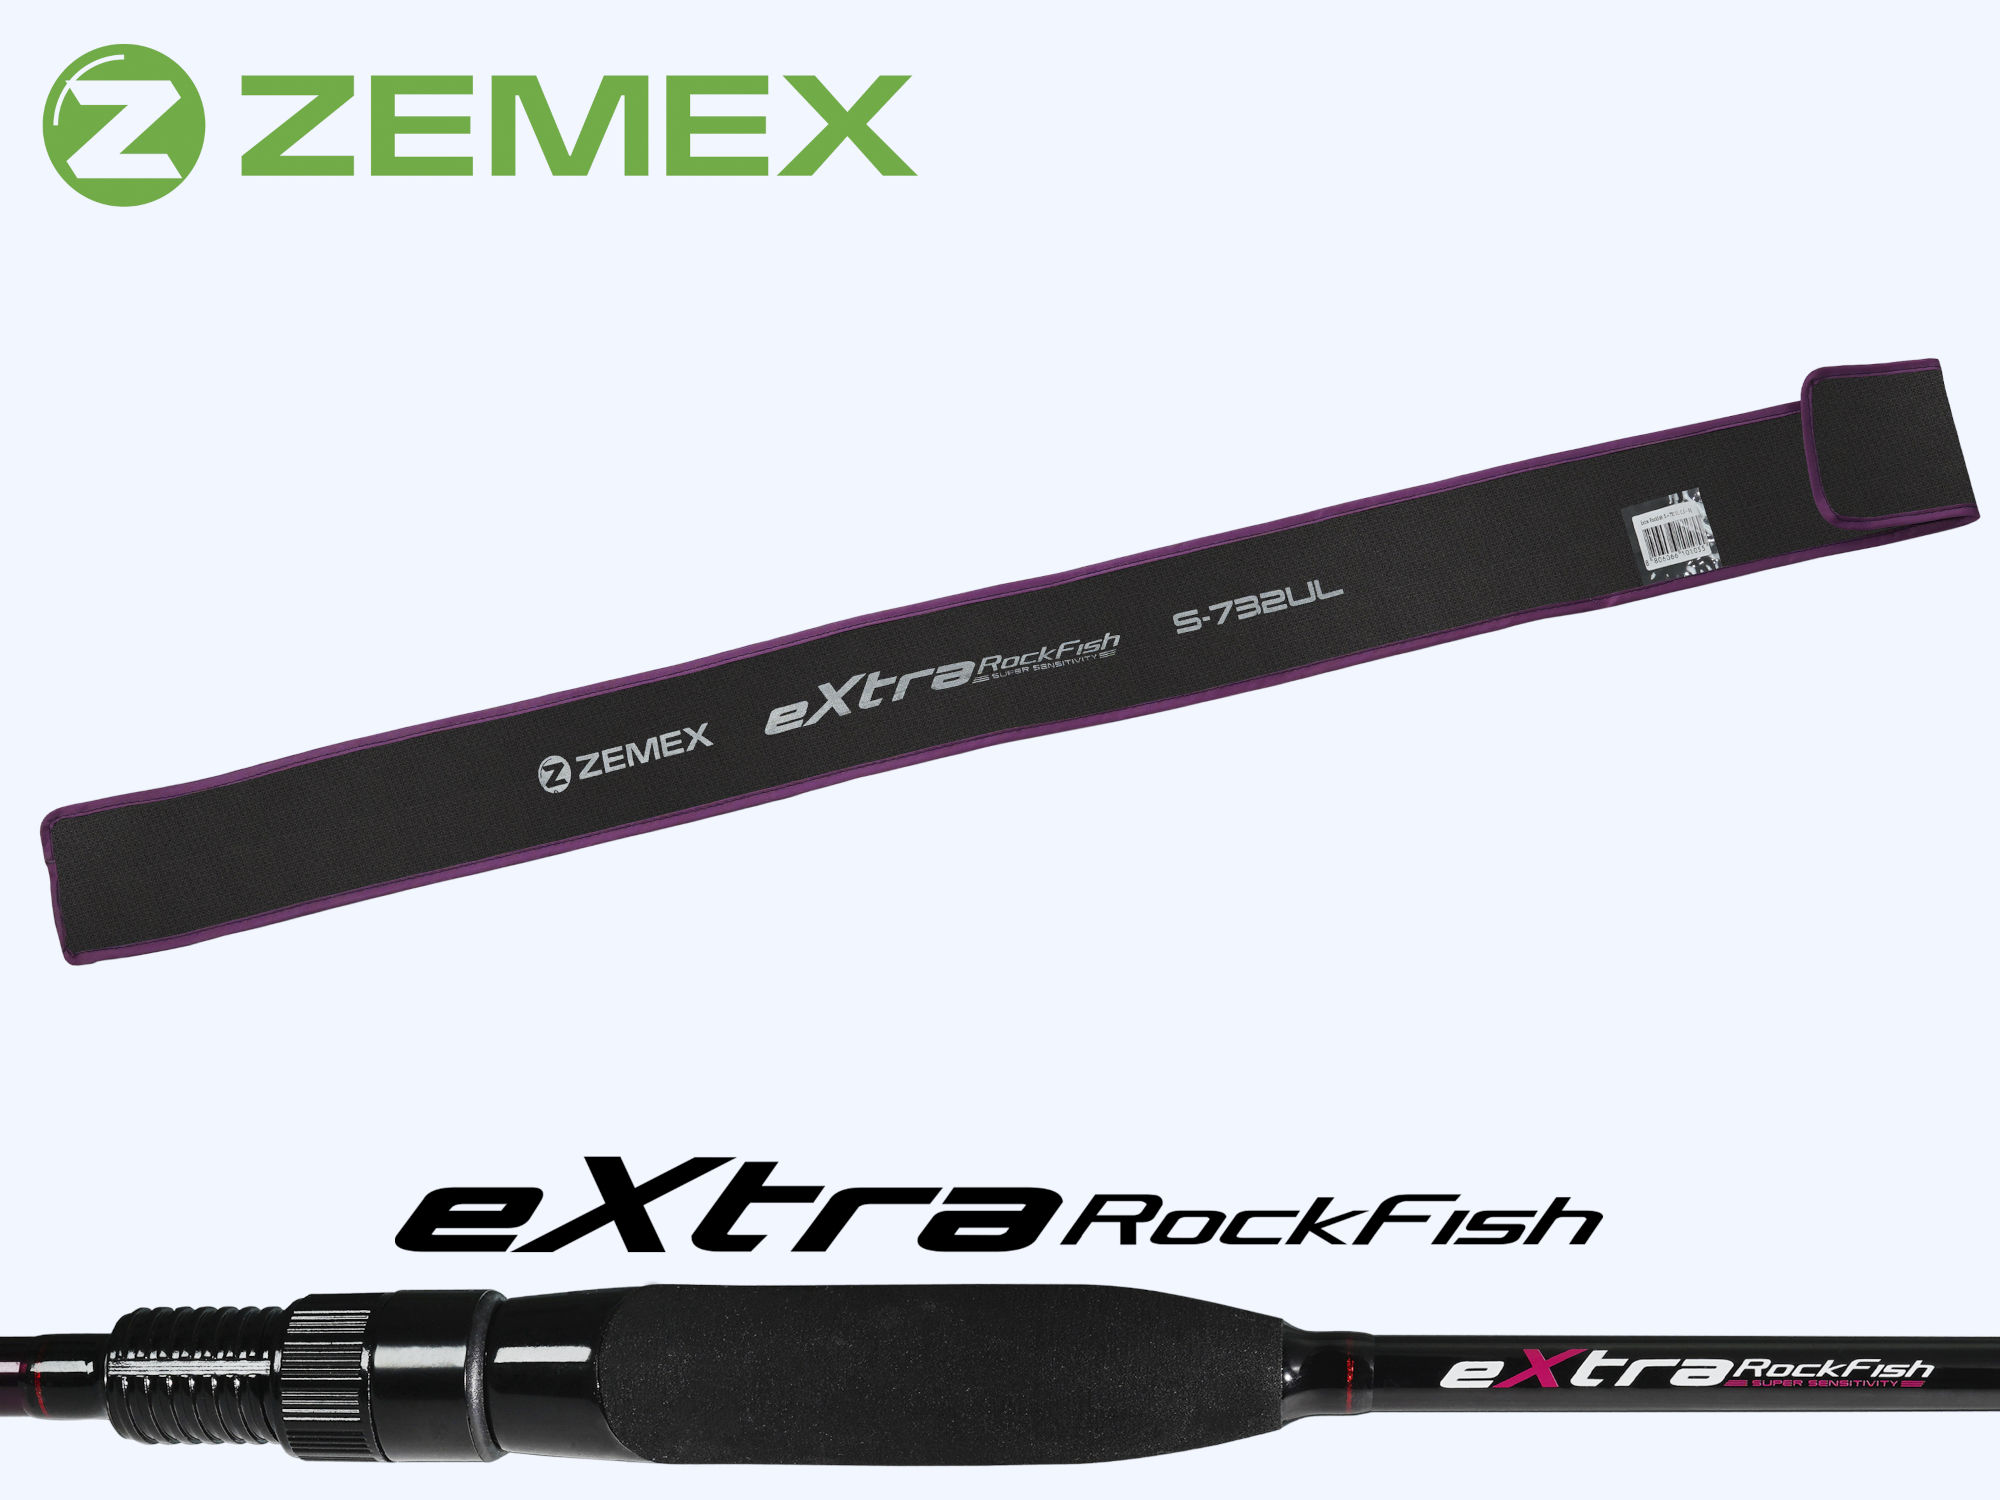 Спиннинг ZEMEX EXTRA S762UL 1-5 g